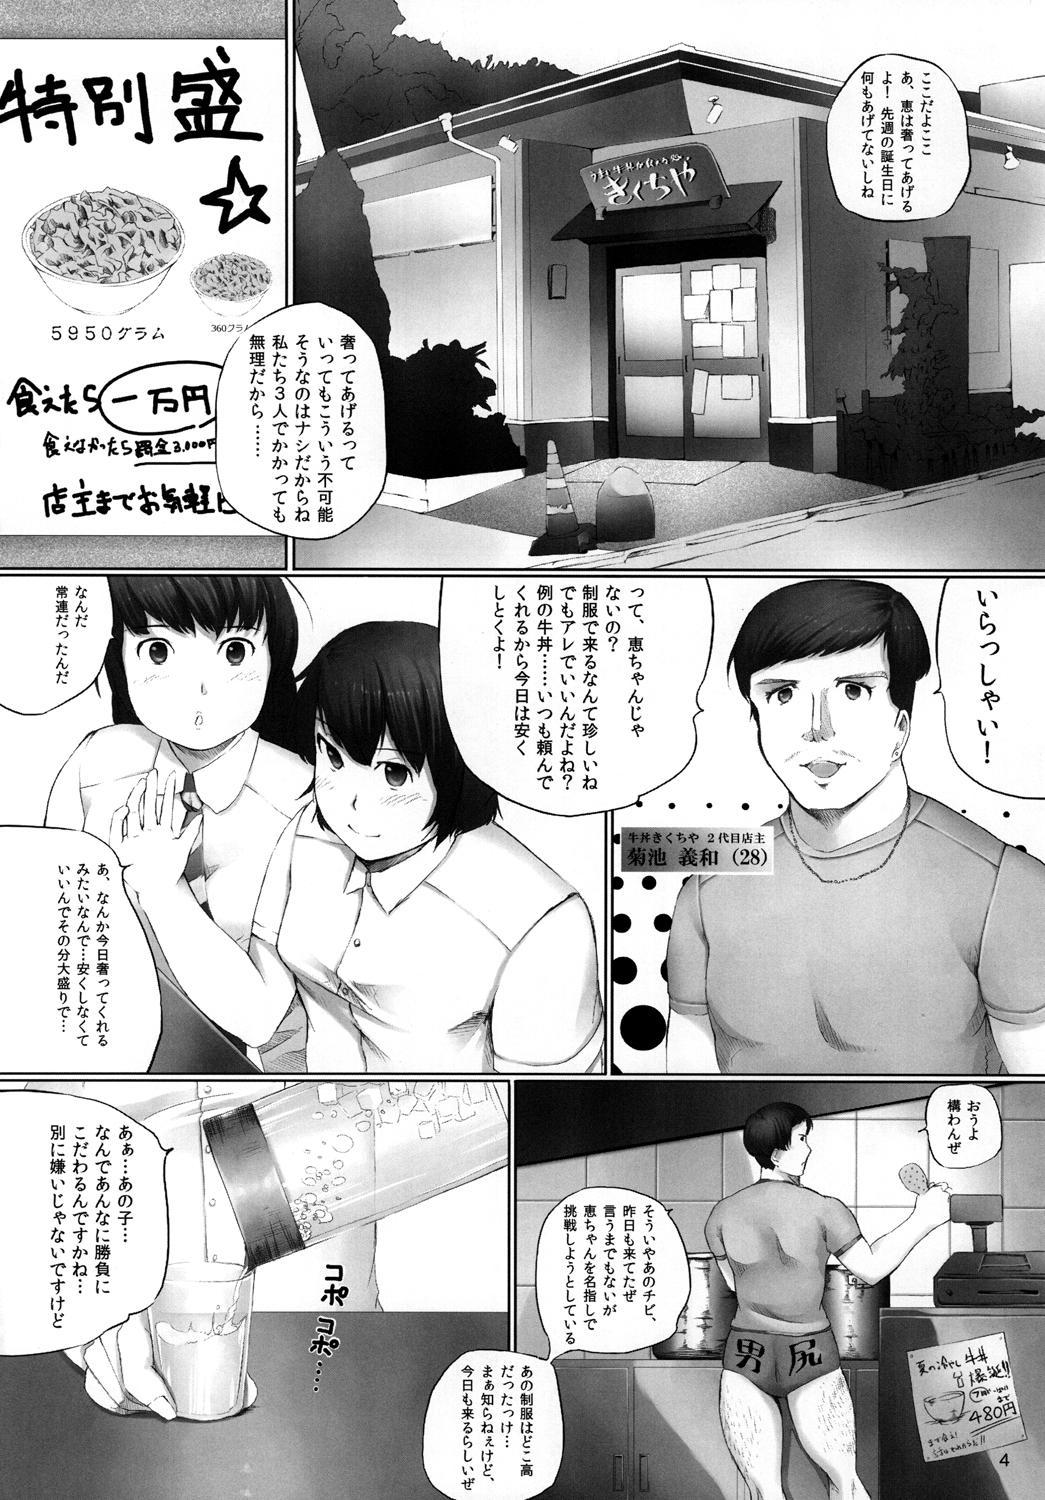 Petite OVER REV - Oogui Musumetachi no Hibi 2 Chastity - Page 5